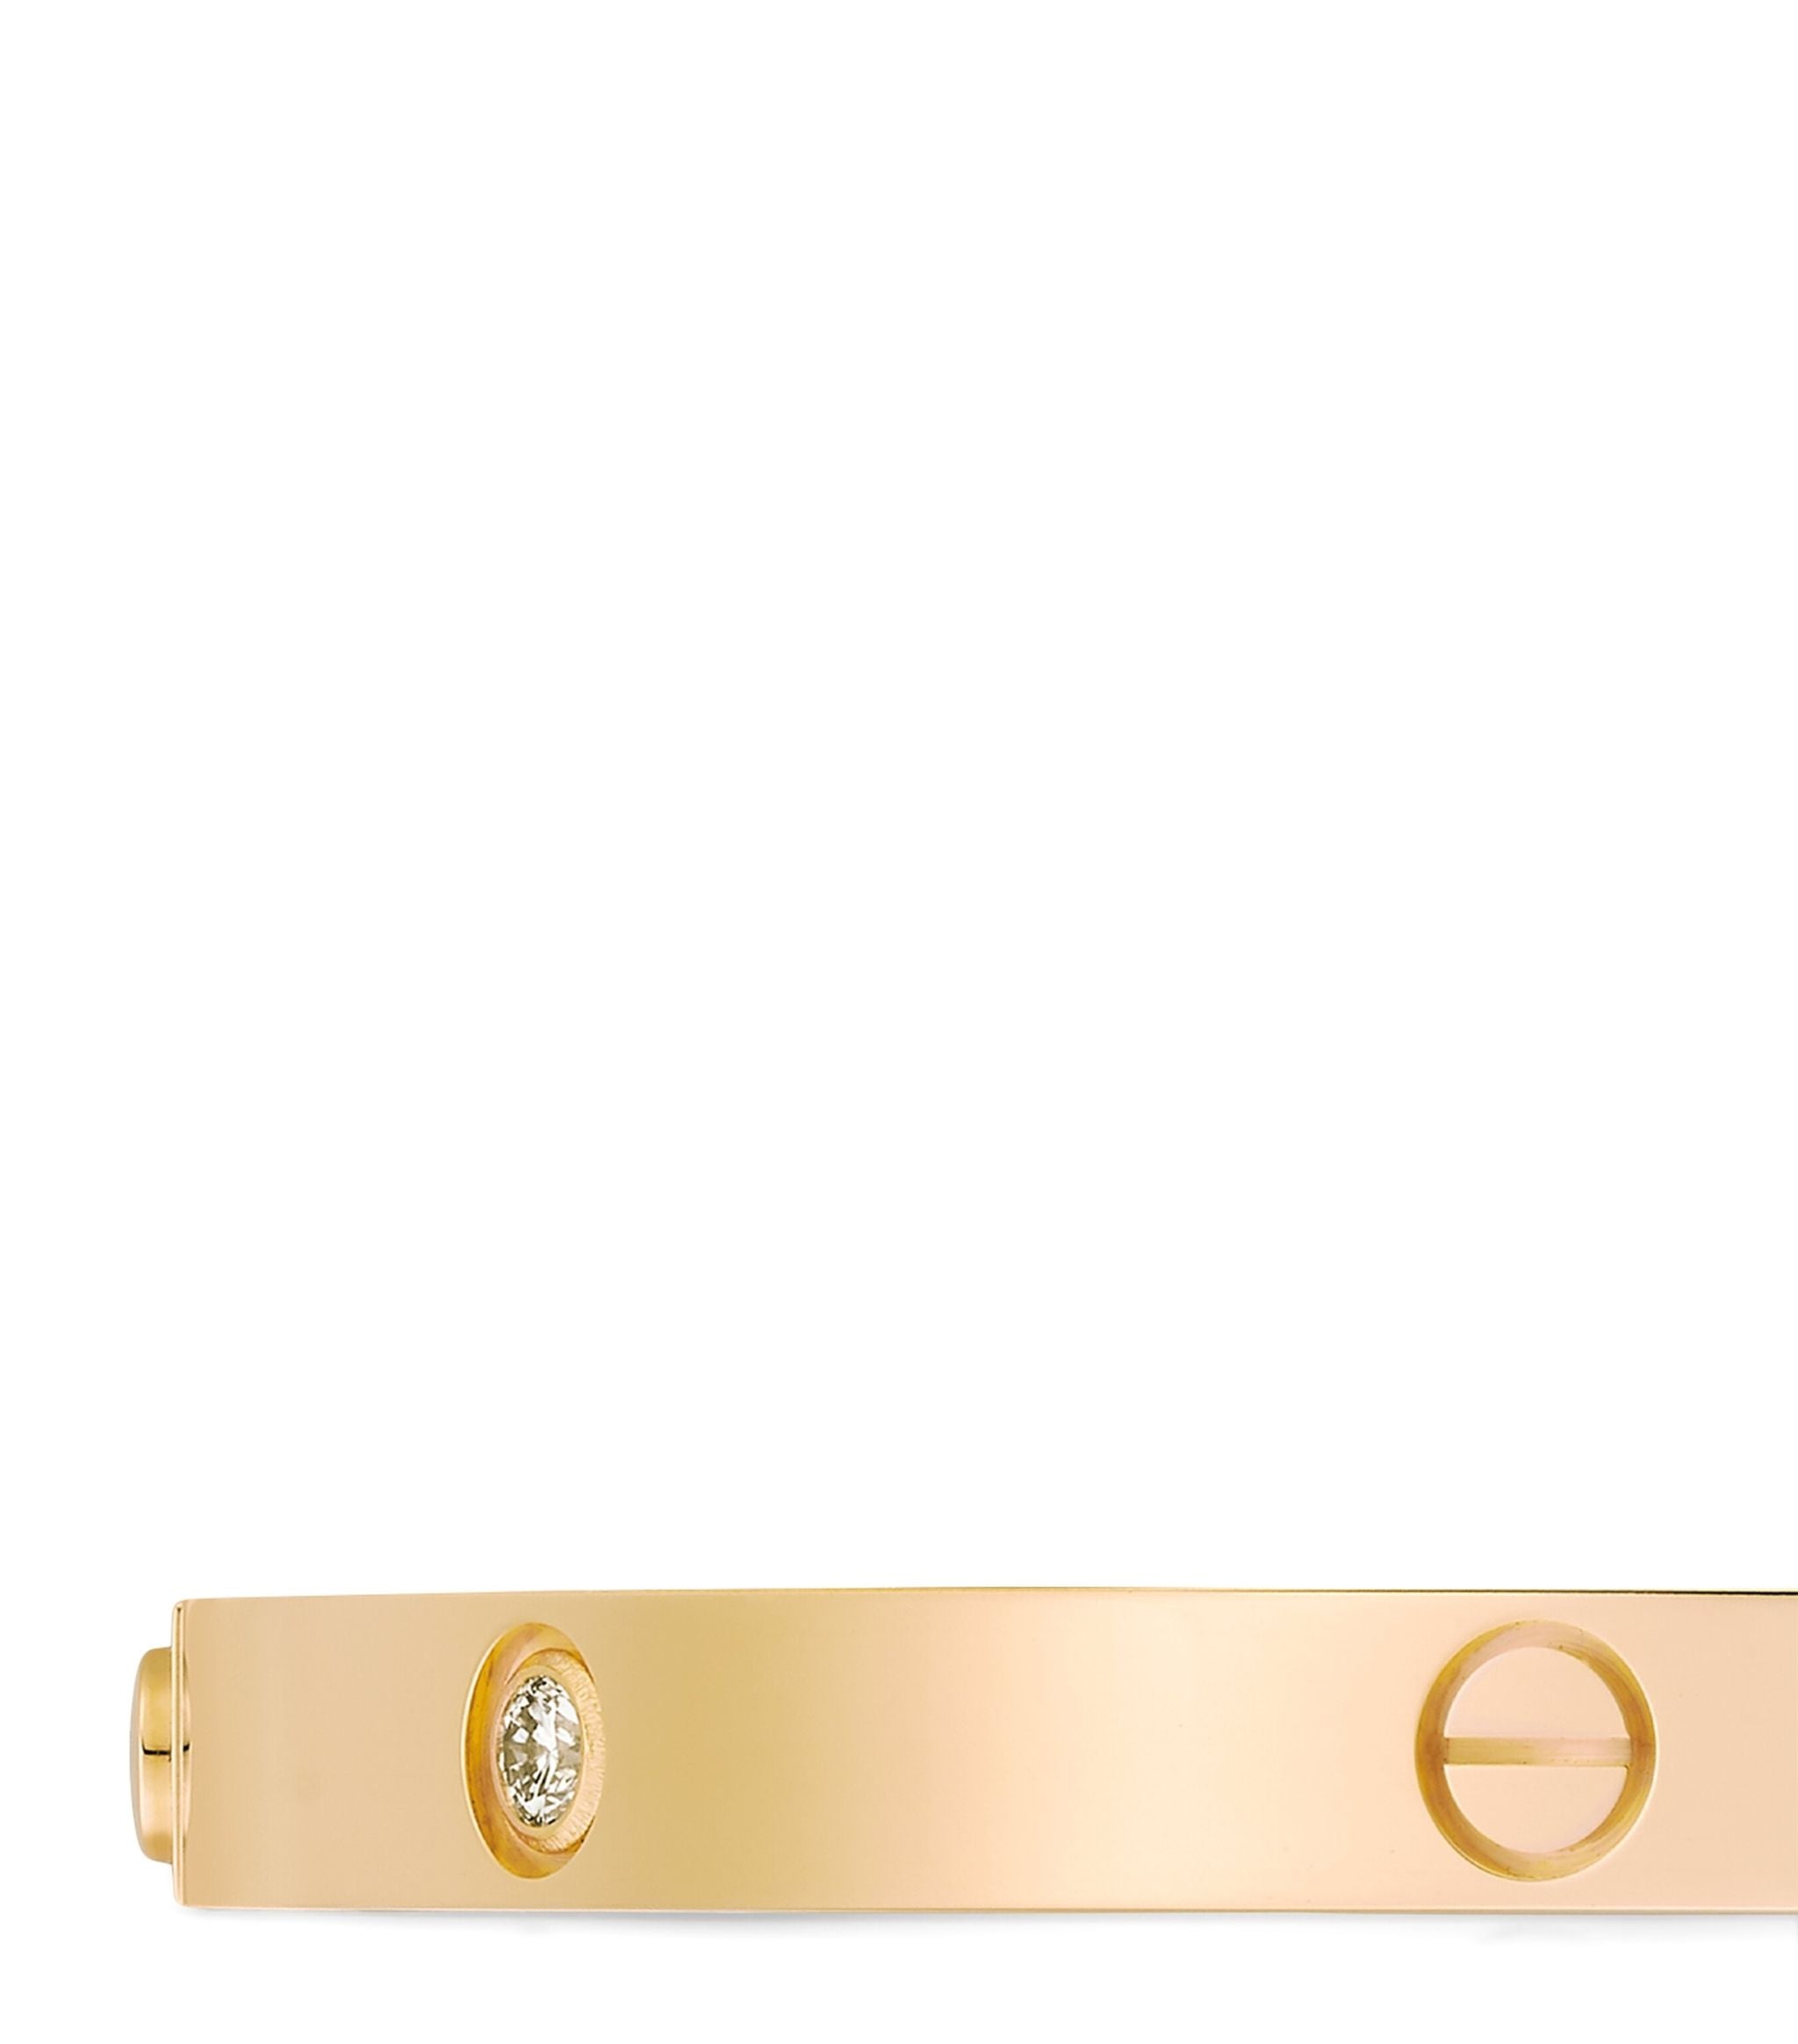 Cartier Small Yellow Gold LOVE Bracelet, Harrods UK